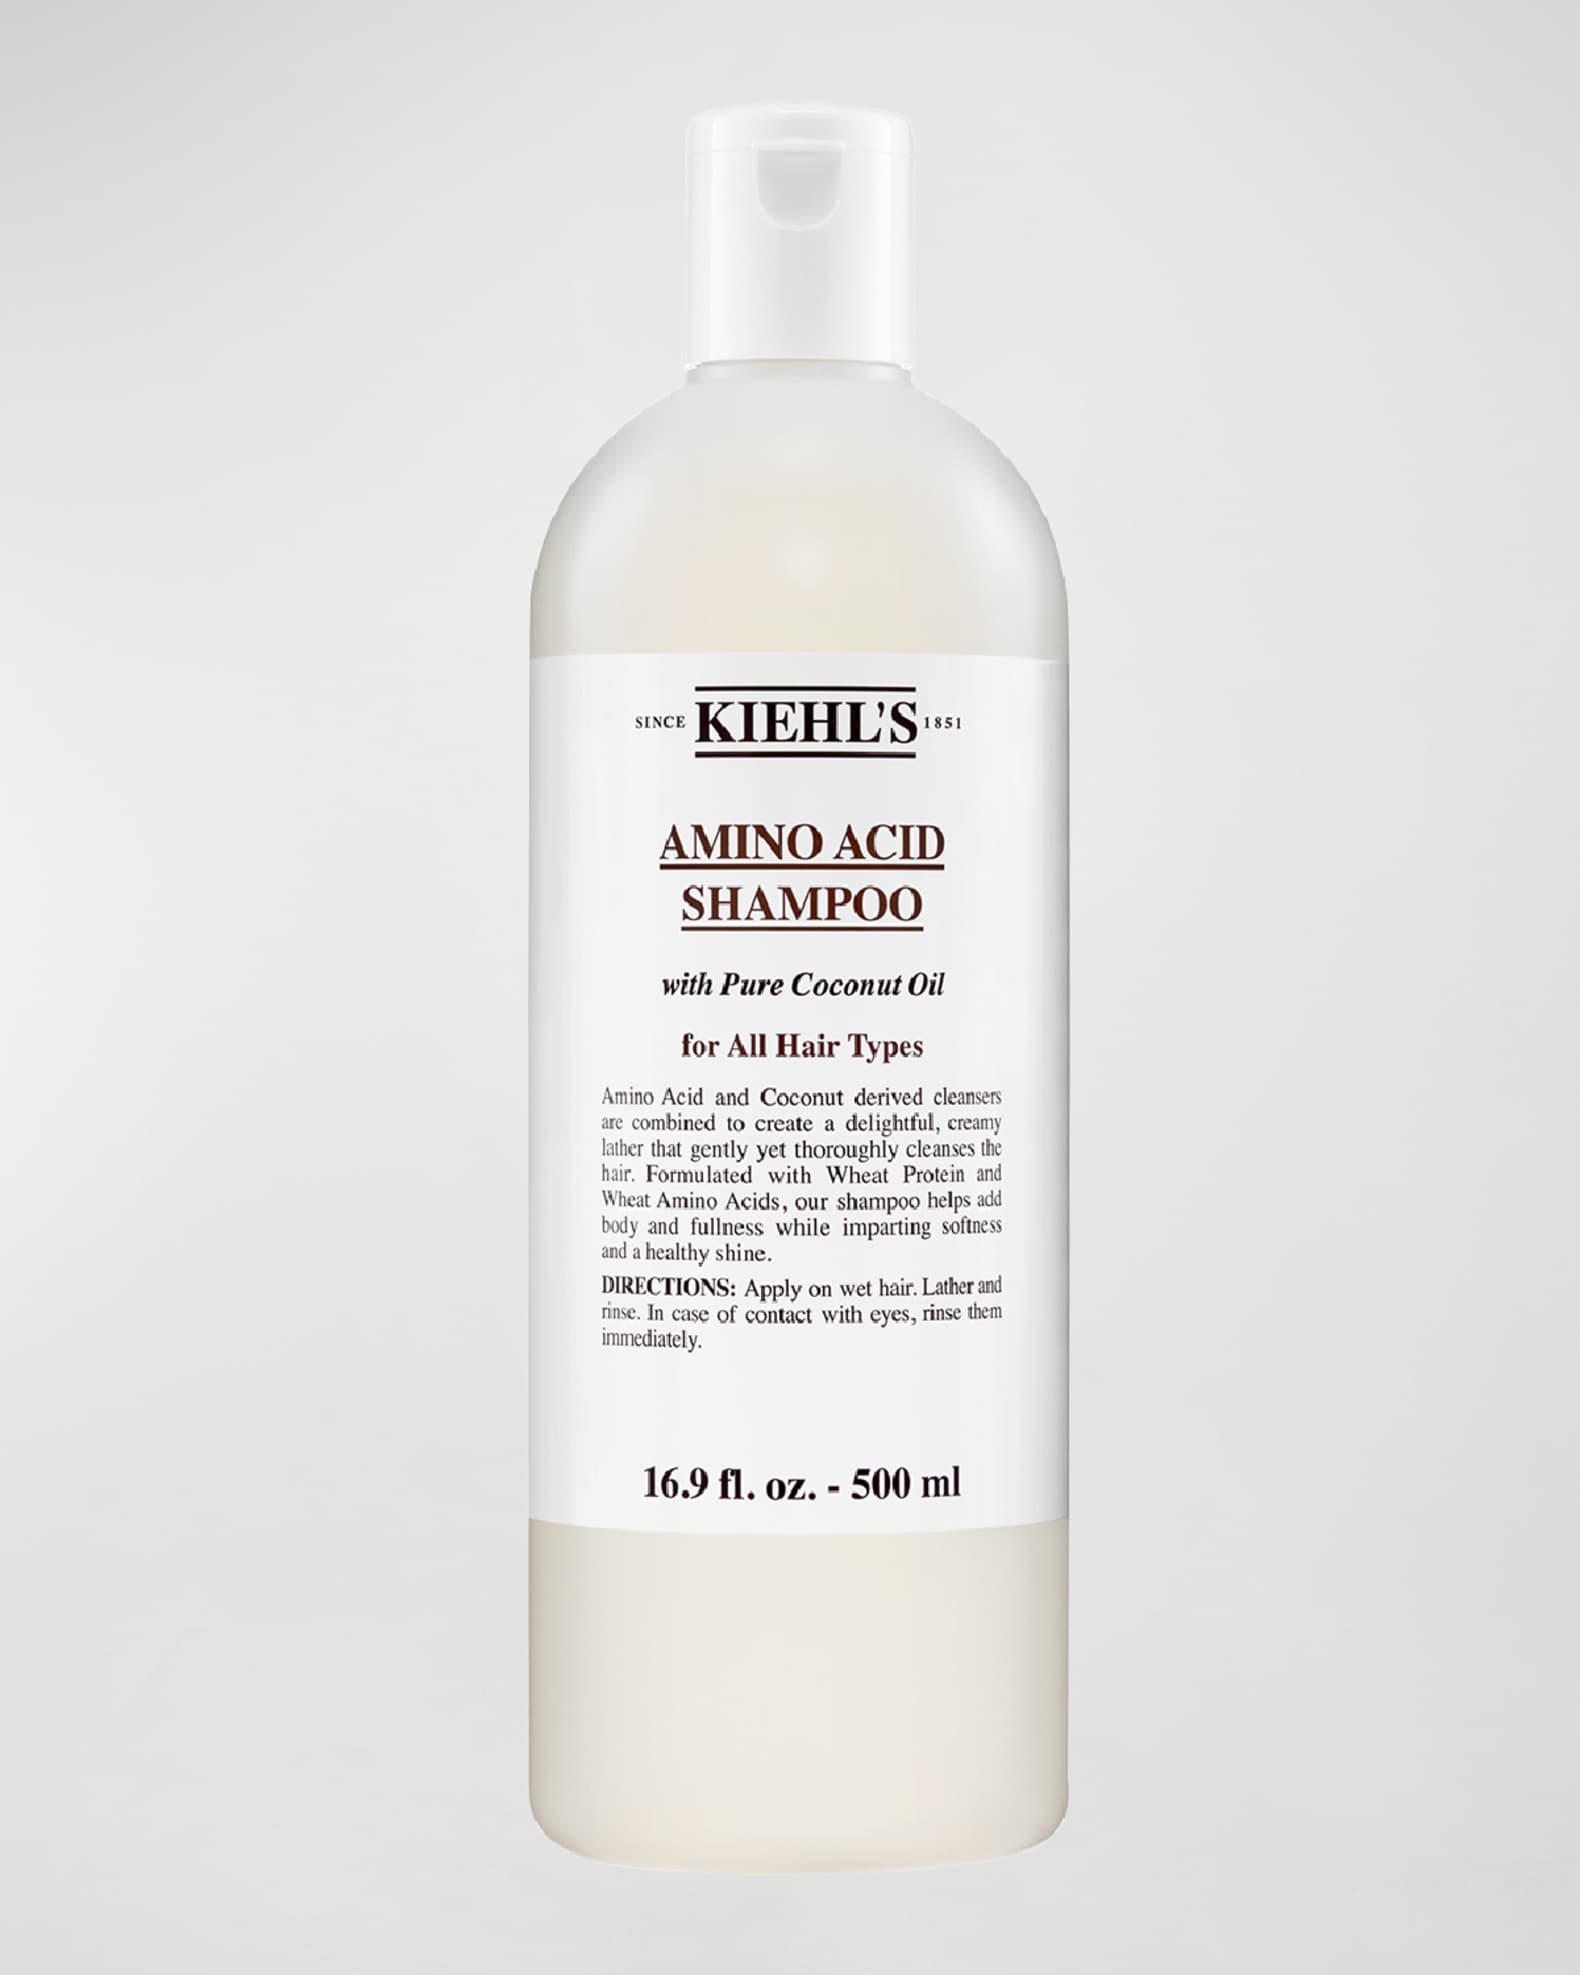 tøve Fellow hykleri Kiehl's Since 1851 Amino Acid Shampoo, 16.9 oz. | Neiman Marcus